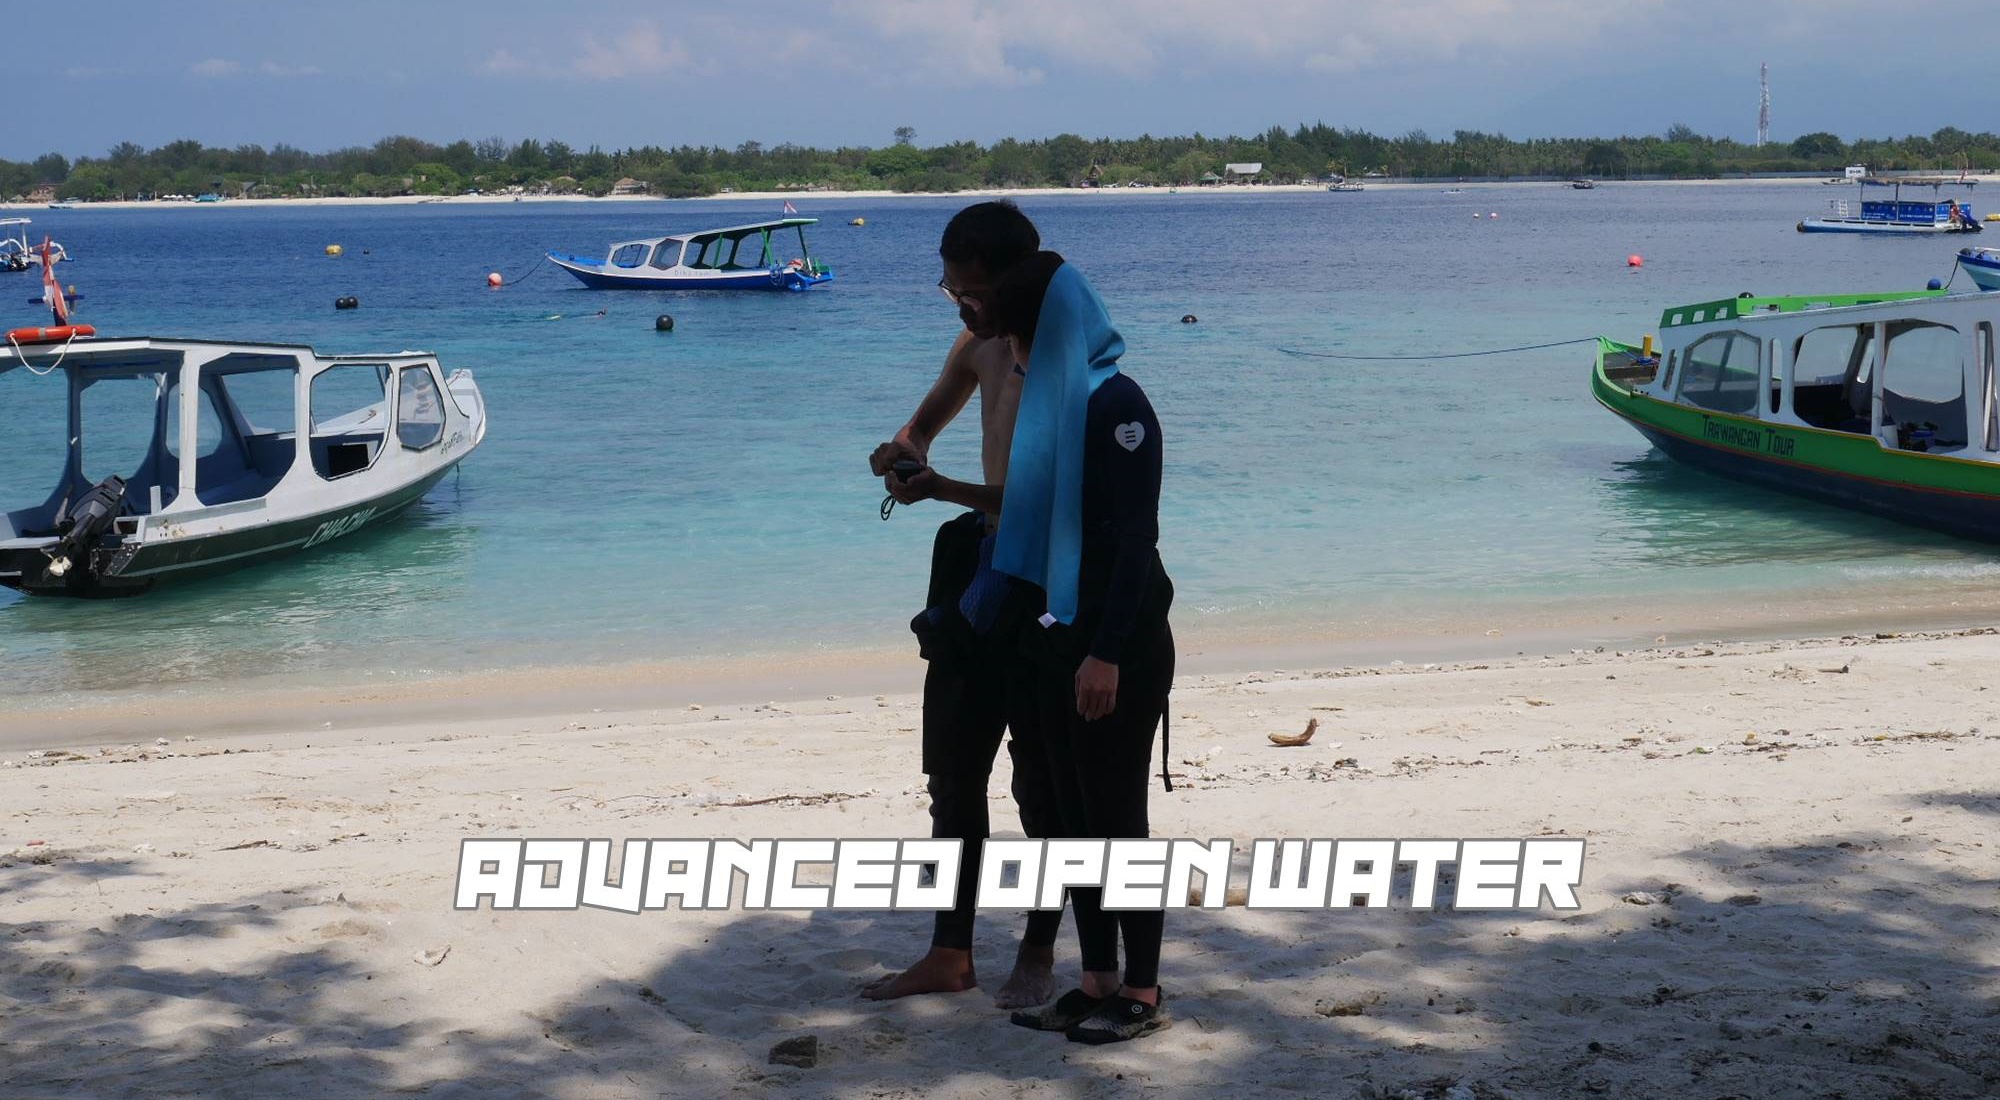 Kursus advanced openwater